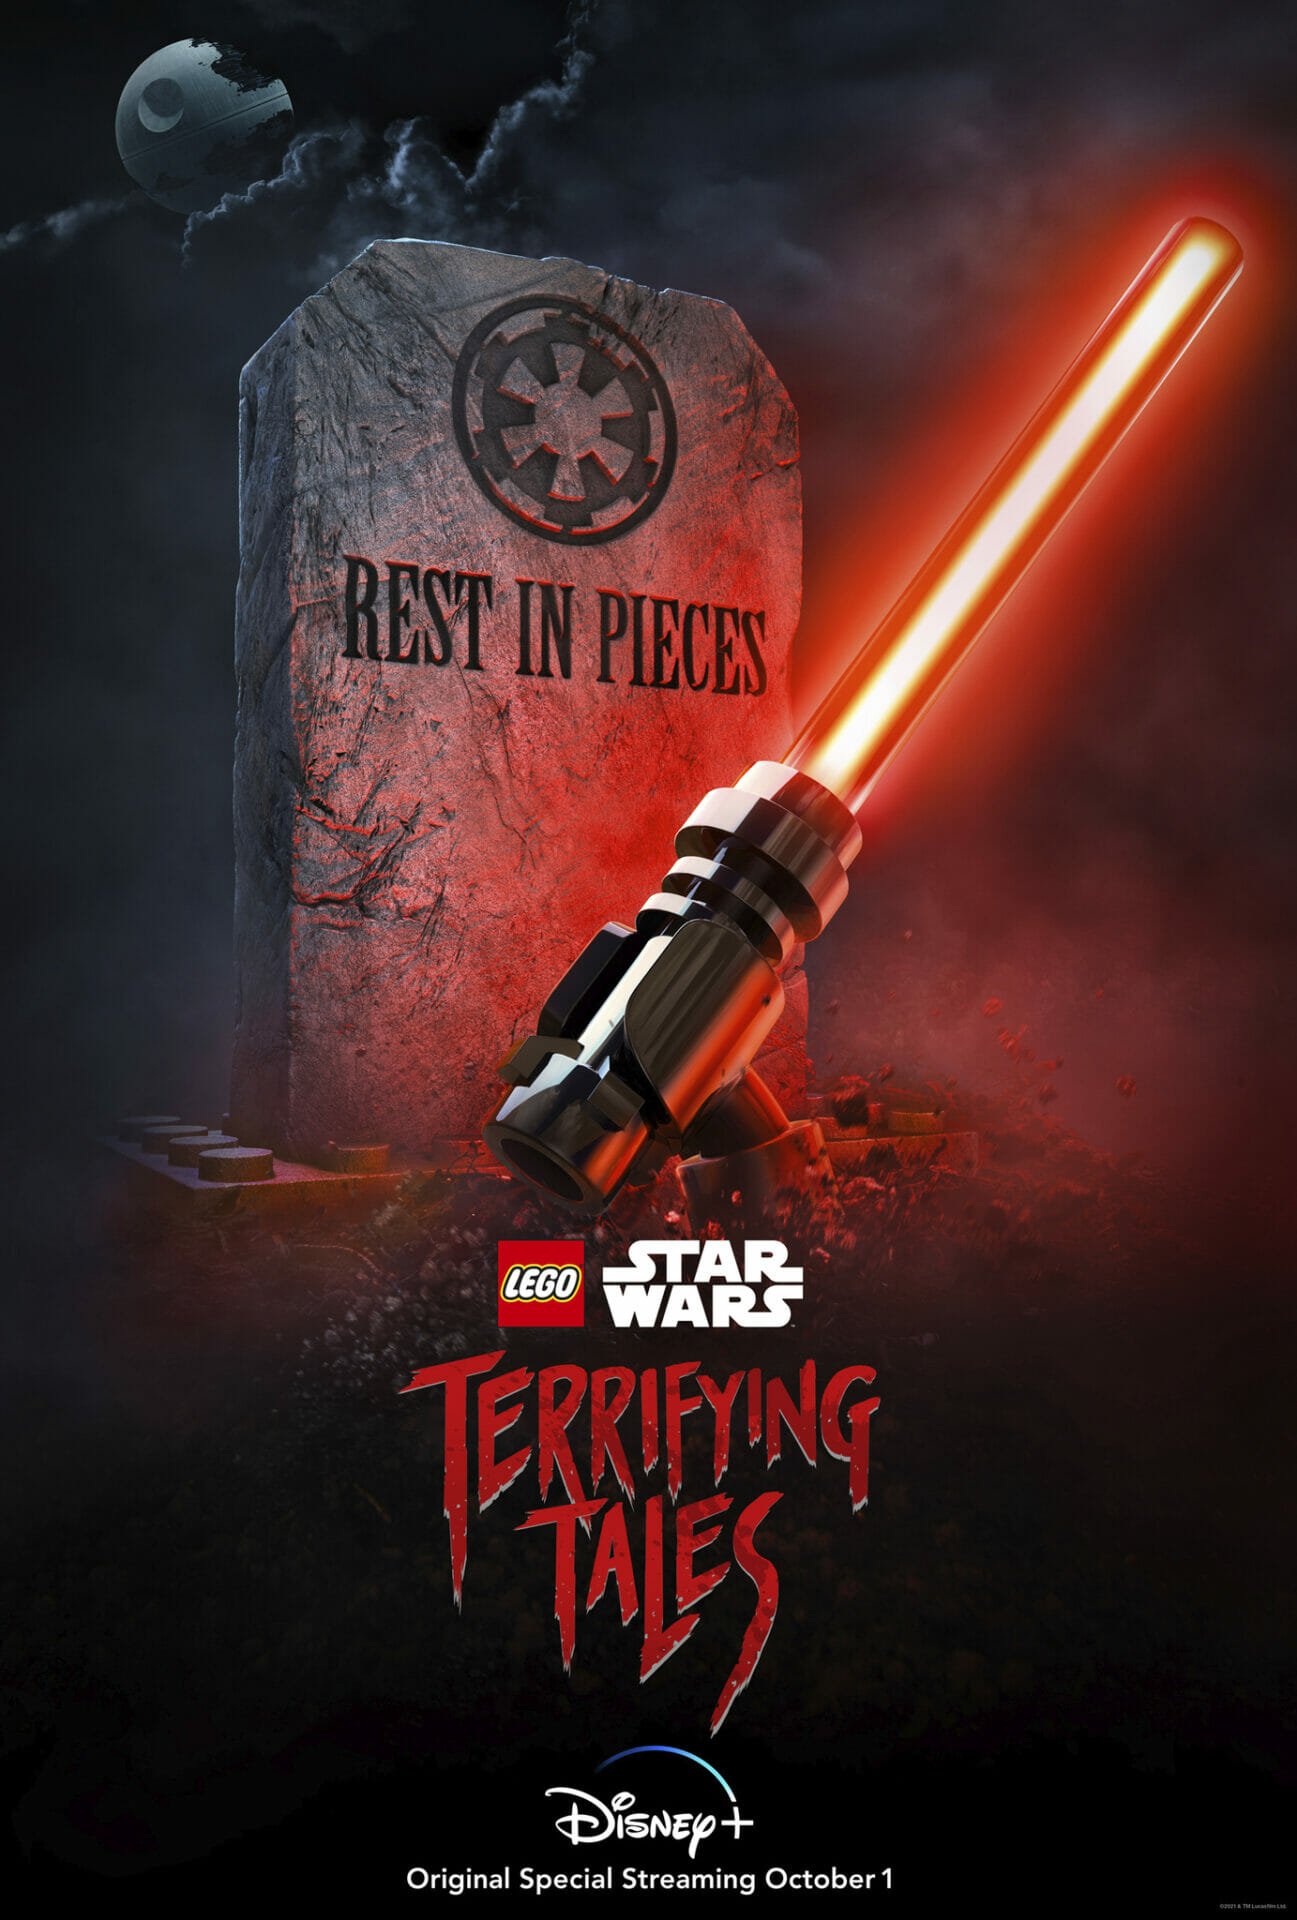 Lego Star Wars Returns With Dark Side Terrifying Tales